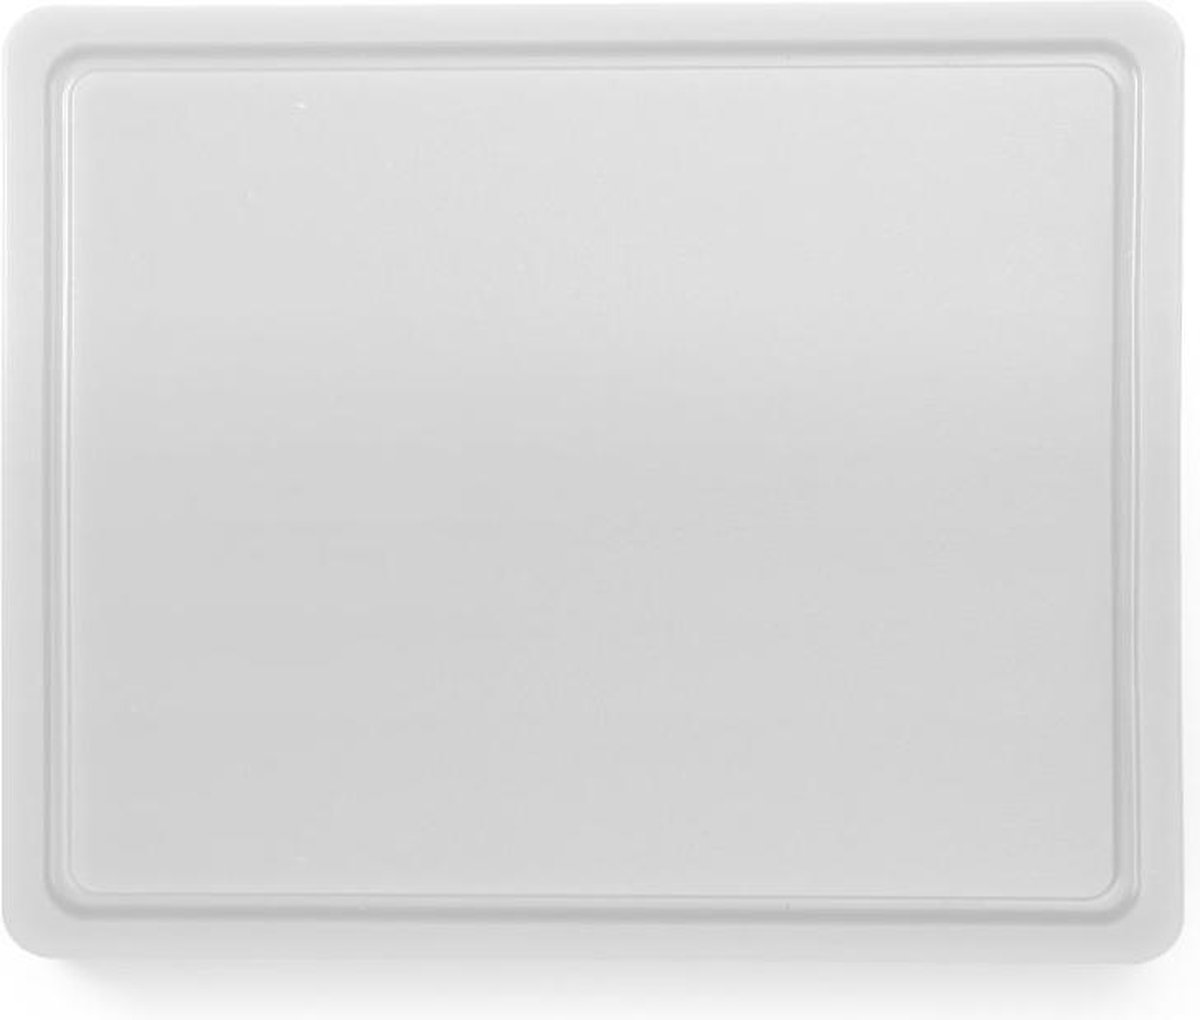 Hendi Snijplank met sapgeul - Wit - HACCP 32,5x26,5 cm